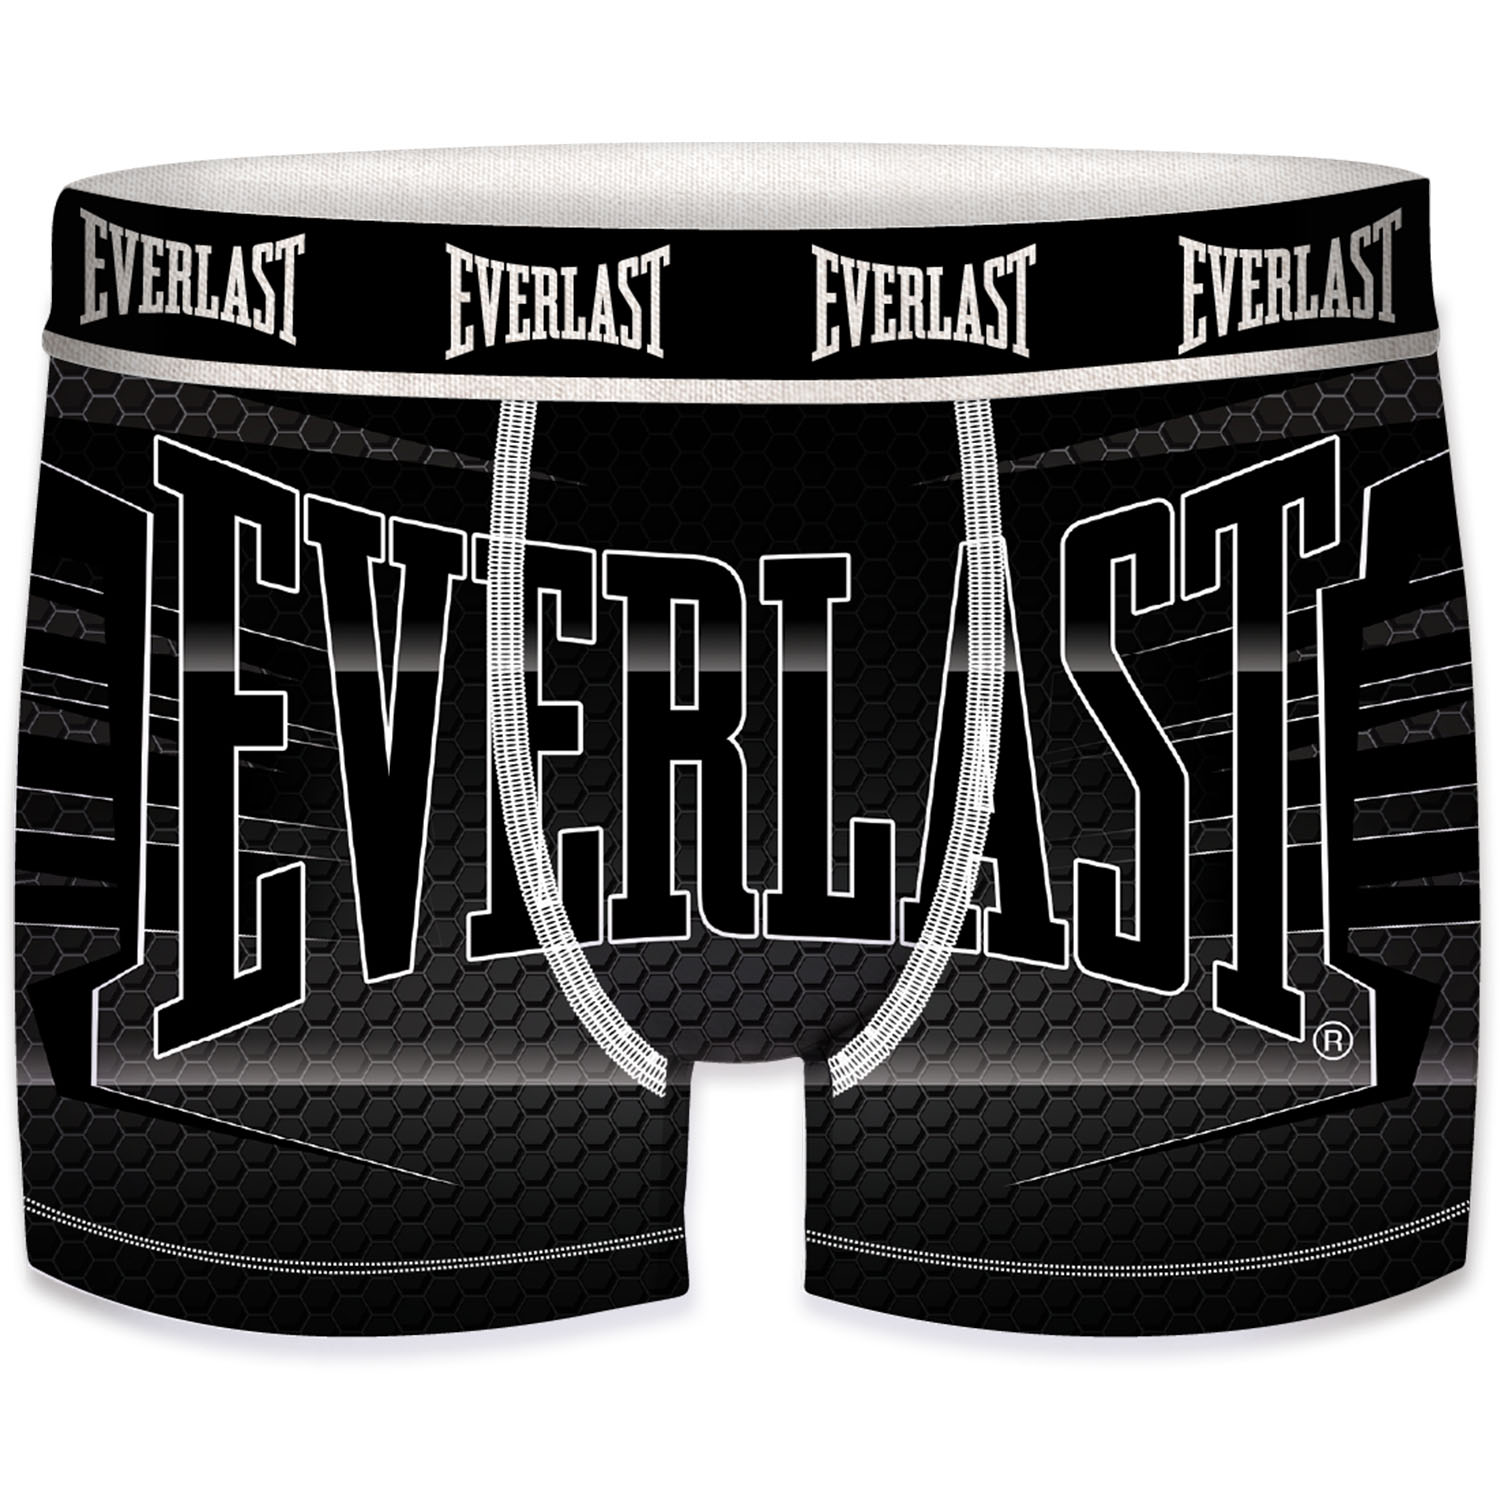 Everlast Boxershorts, One3, black